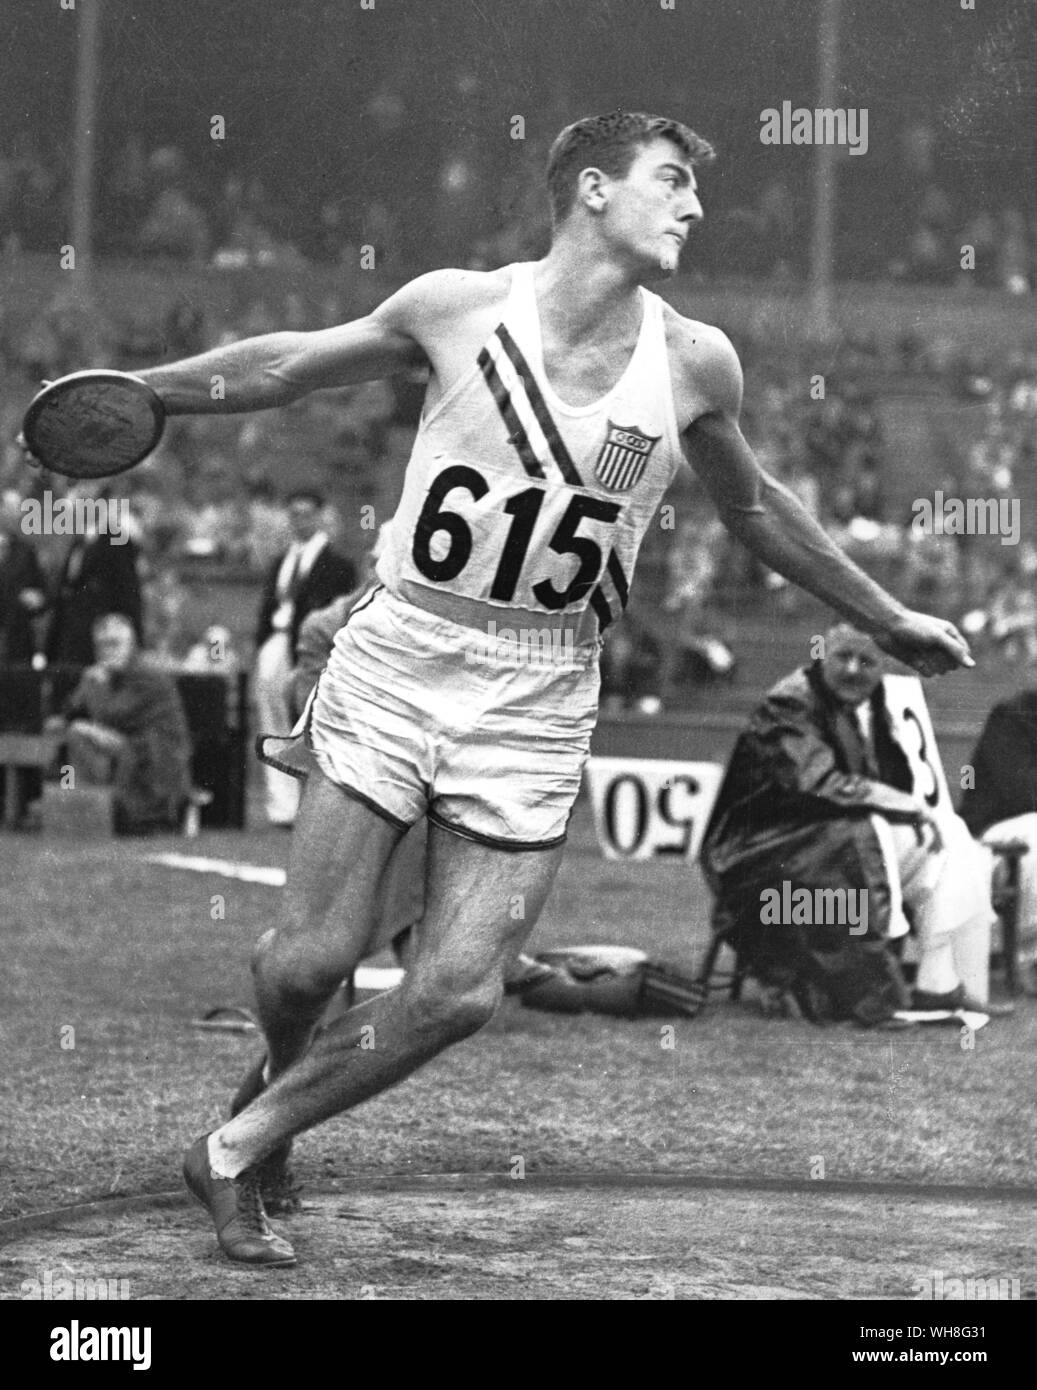 1948 olympic decathlon winner